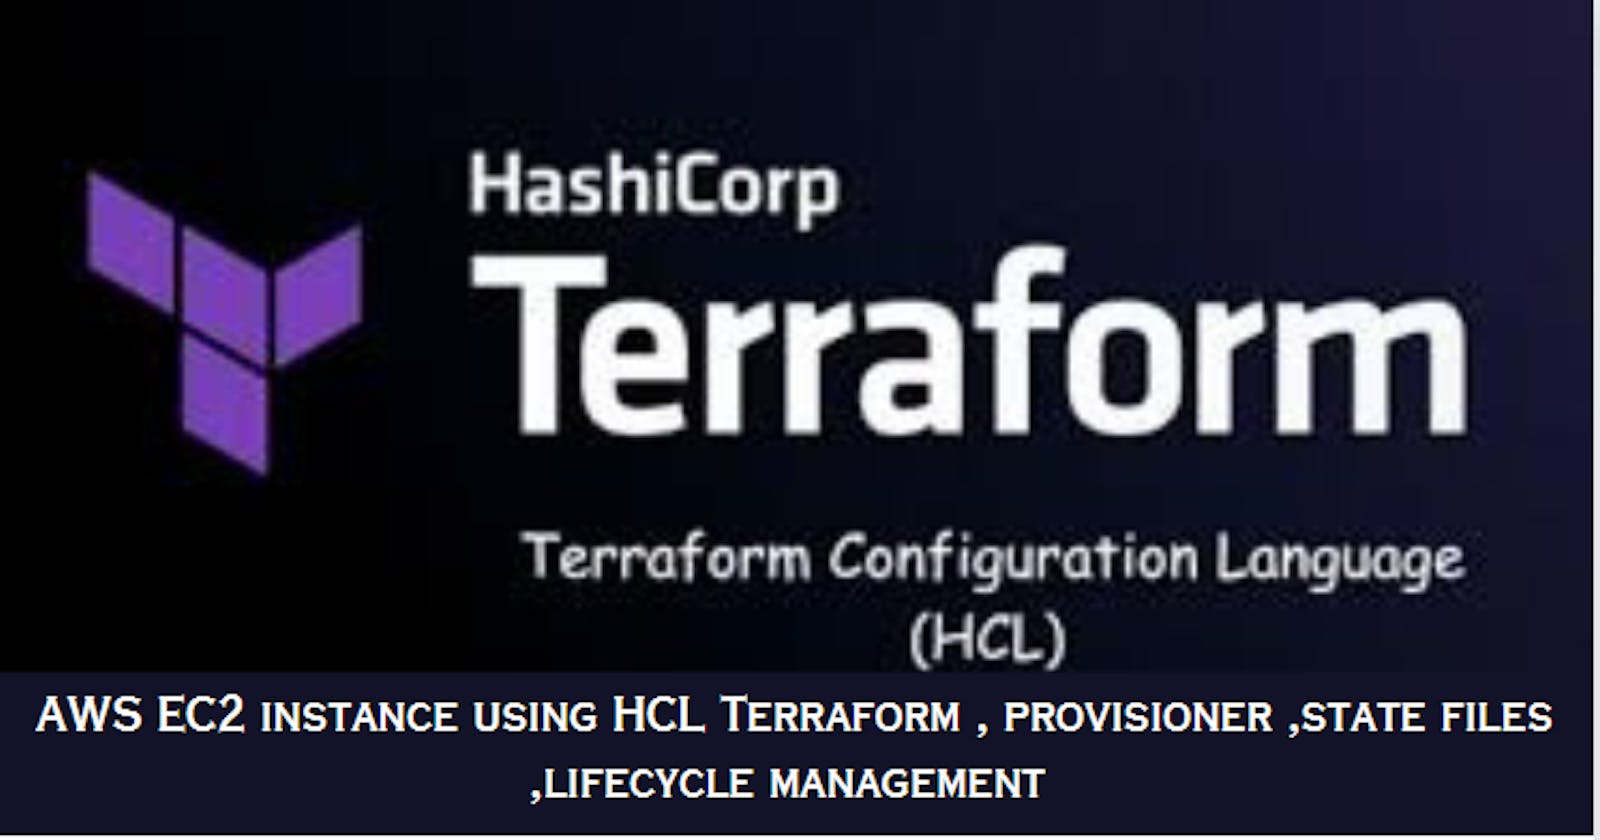 AWS EC2 instance using HCL terraform